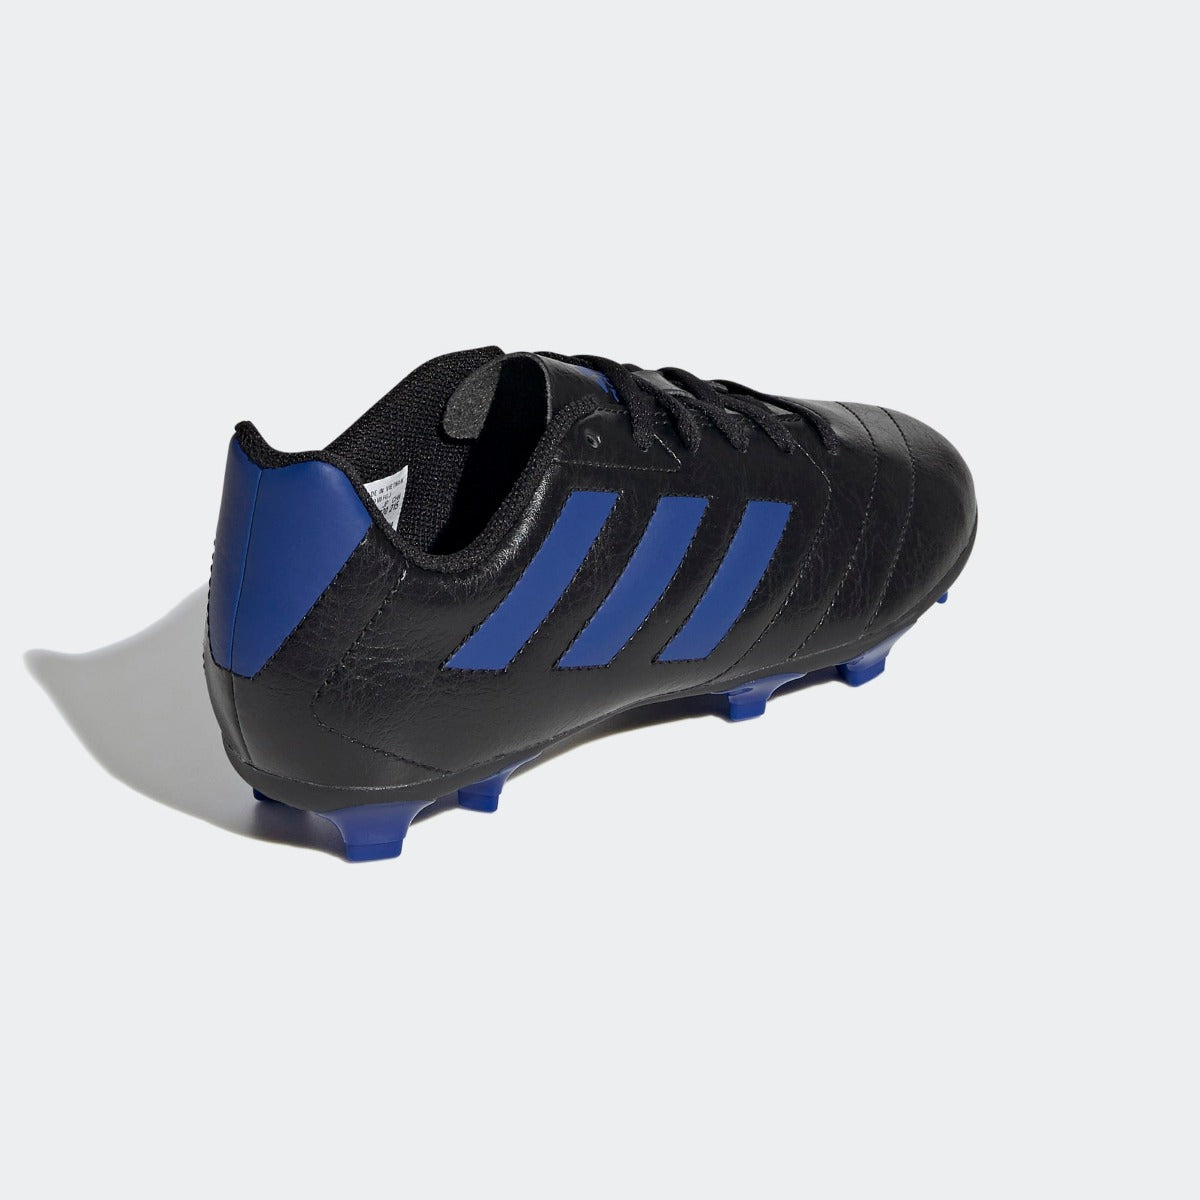 Adidas JR Goletto VII FG - Black-Blue